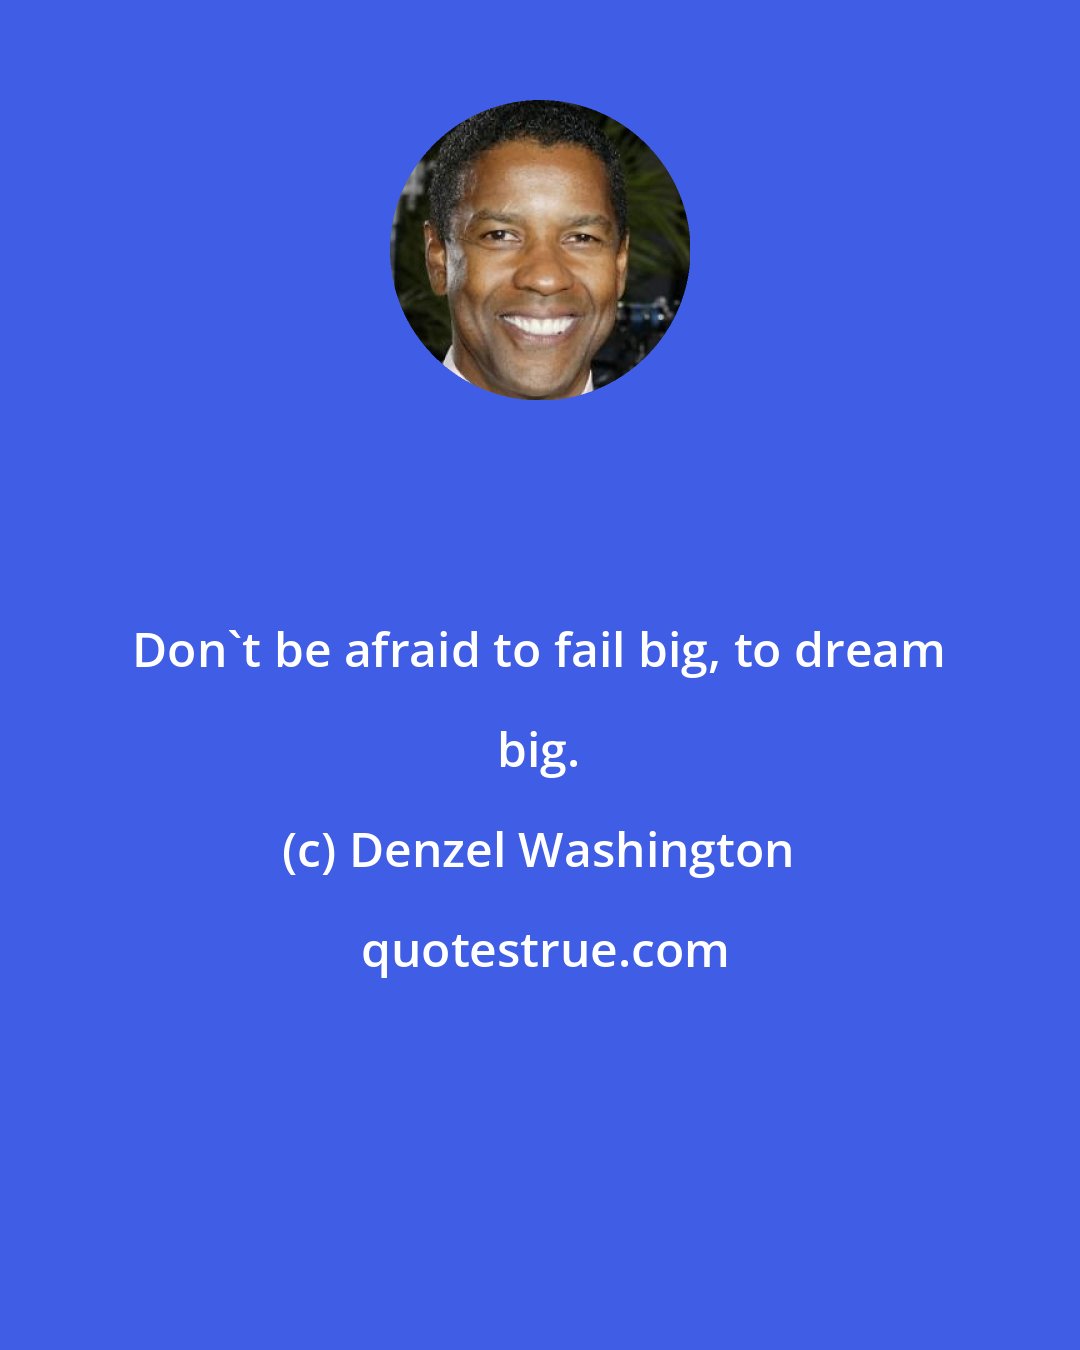 Denzel Washington: Don't be afraid to fail big, to dream big.